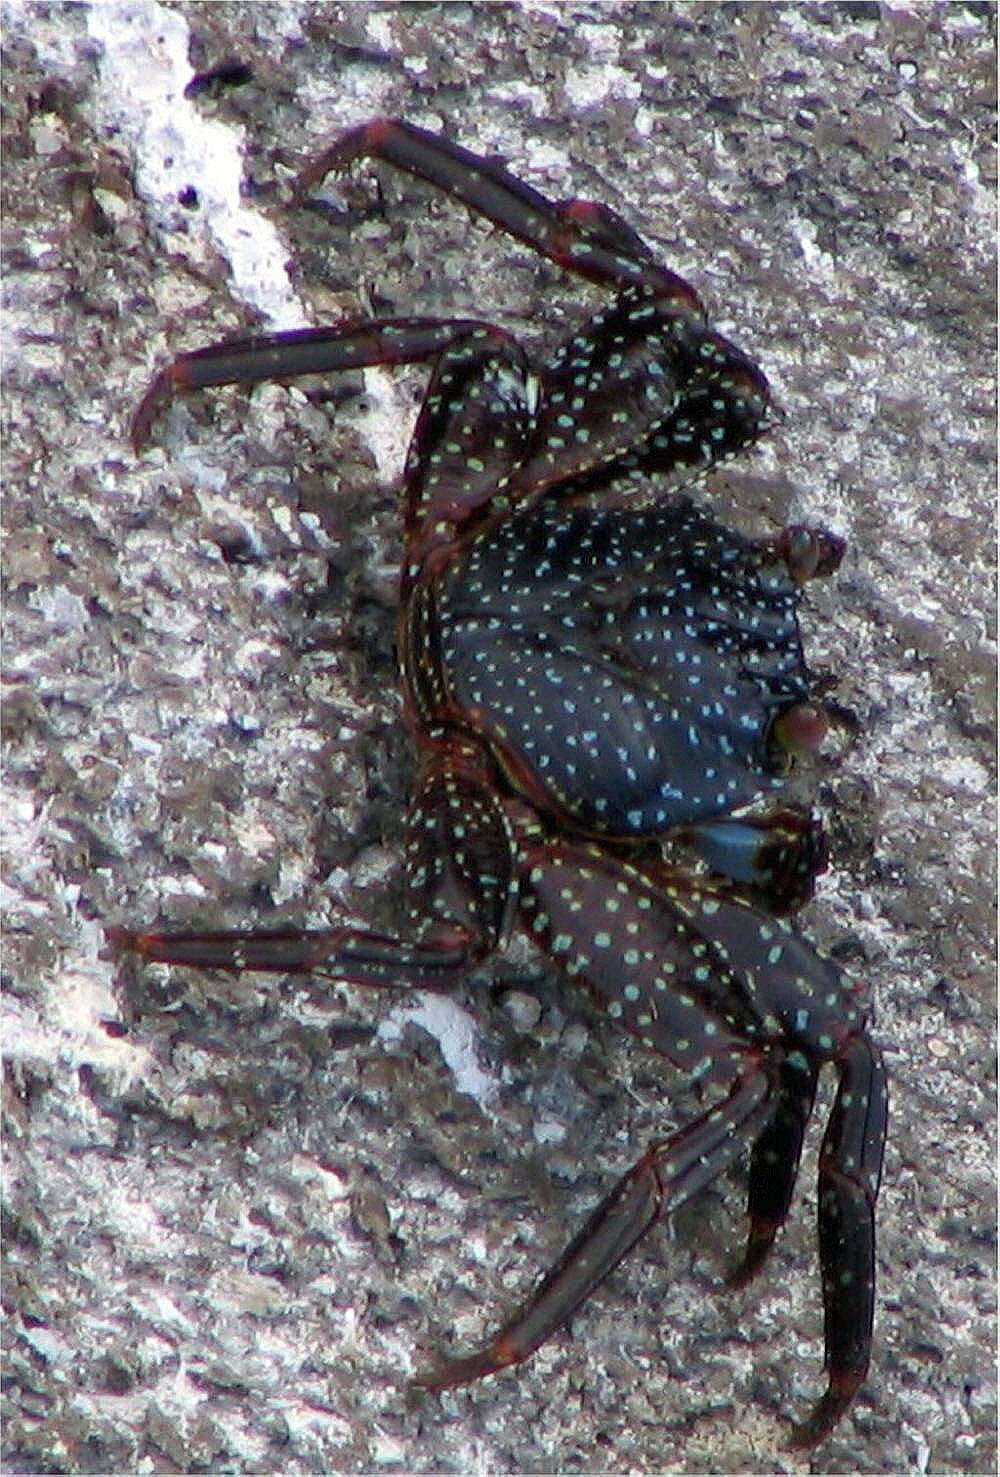 Image of Sally lightfoot crab